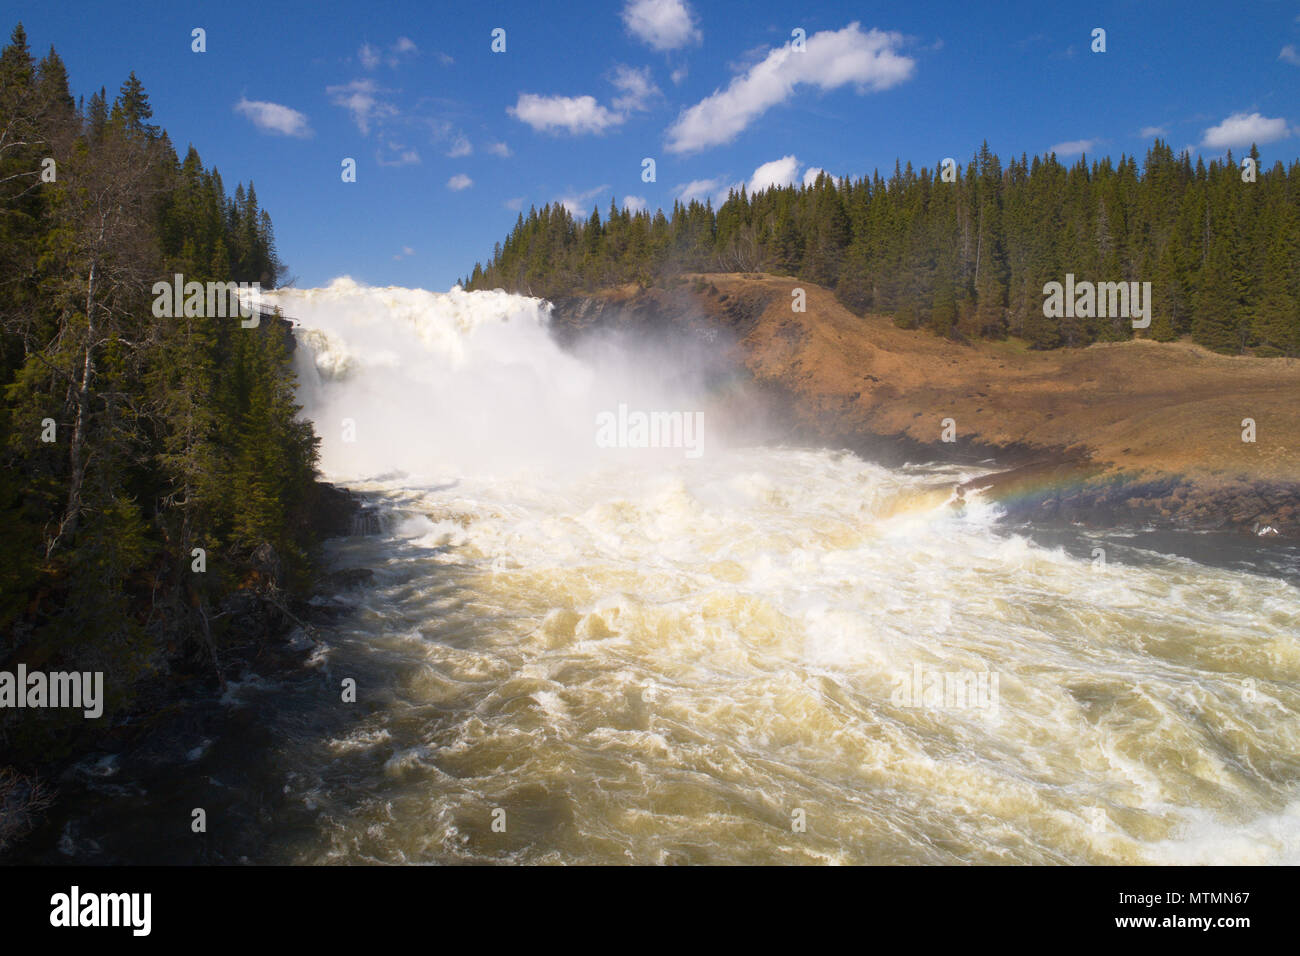 The Swedish waterfall Tannforsen located in the provice Jamtland. Stock Photo